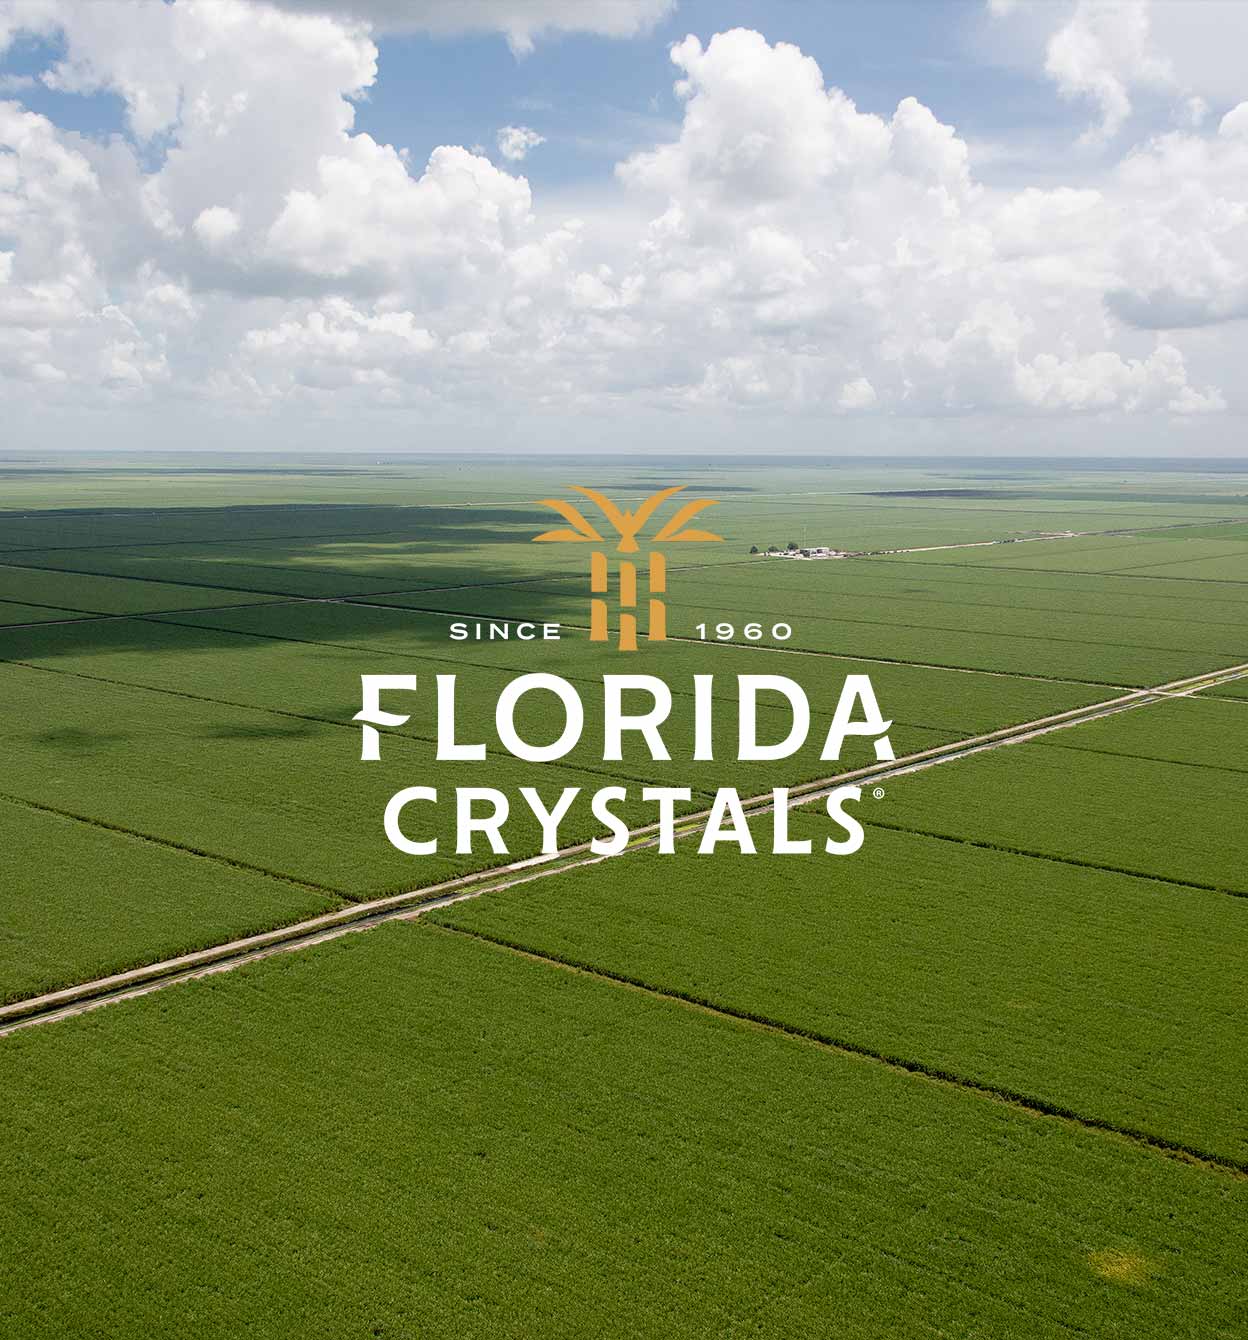 Florida Crystals Story Tile Image